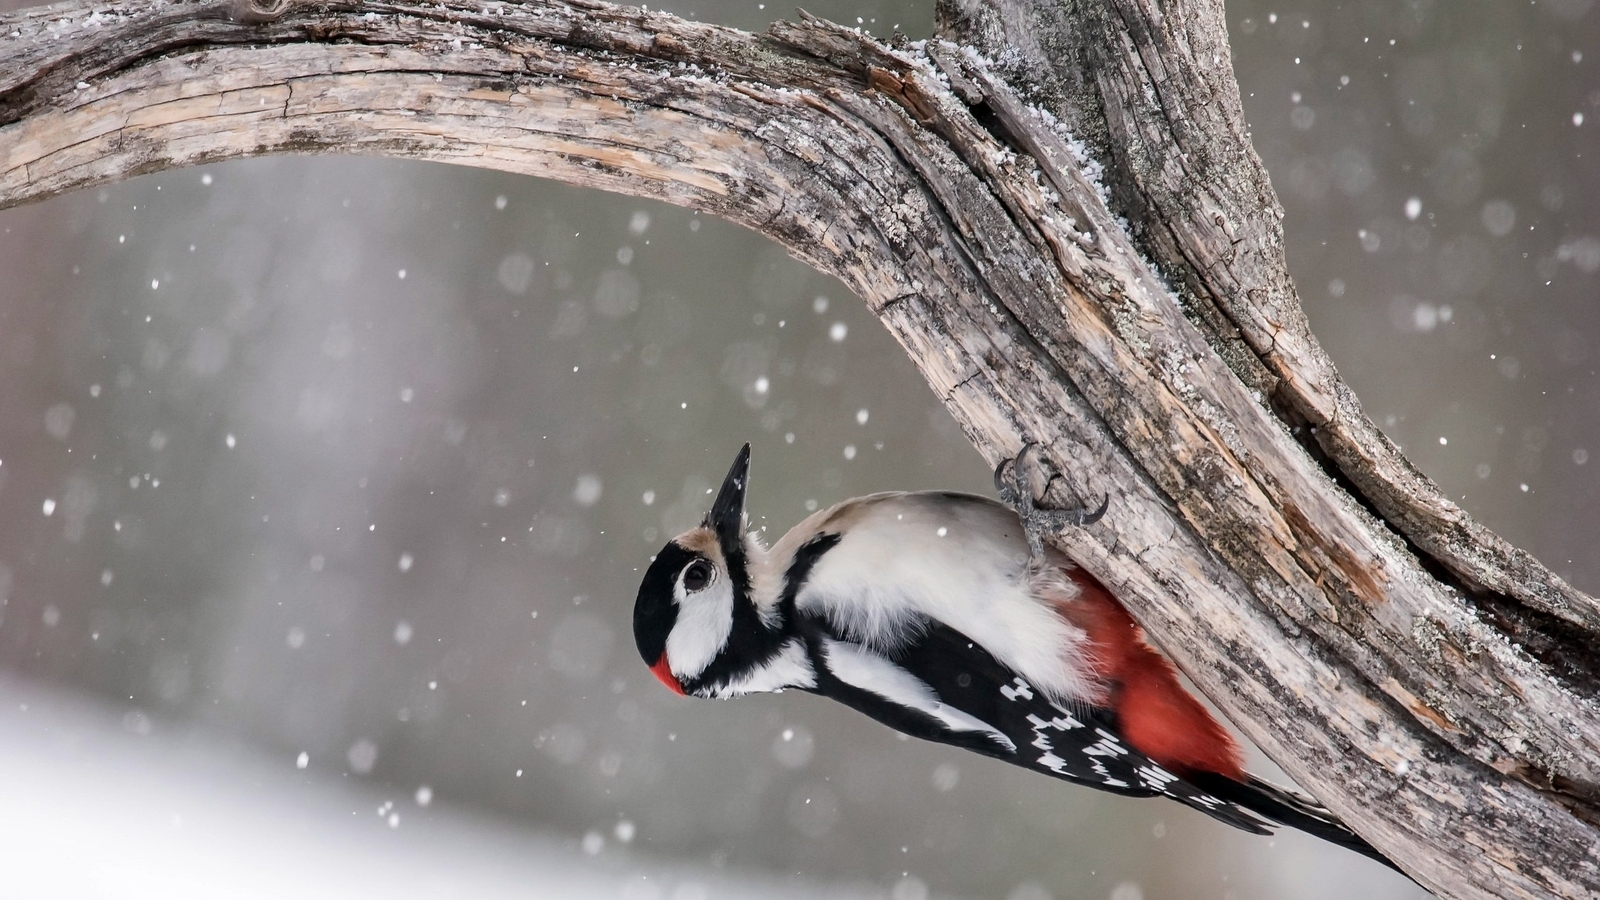 Image: Bird, woodpecker, feather, tree, trunk, sitting, winter, snow, snowflakes